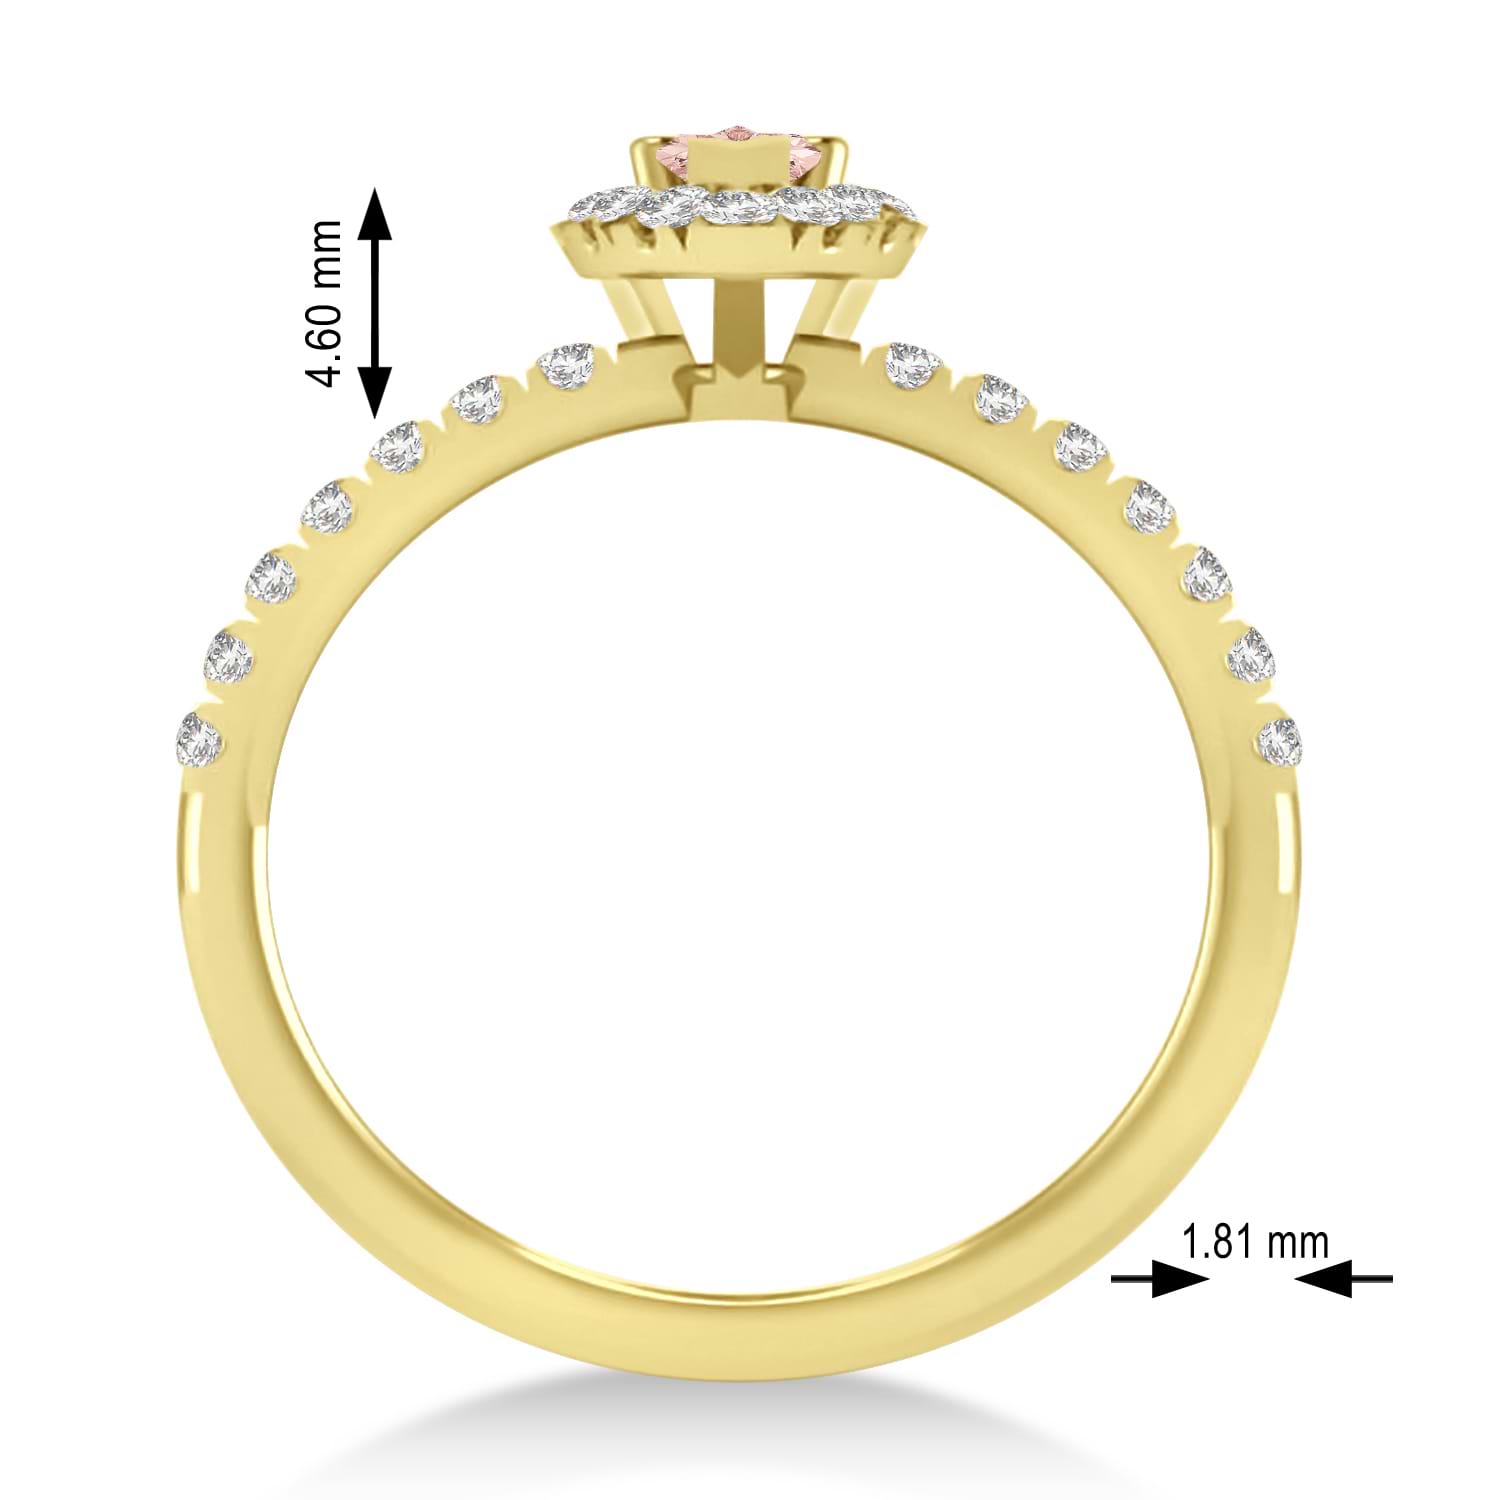 Pear Morganite & Diamond Halo Engagement Ring 14k Yellow Gold (0.63ct)